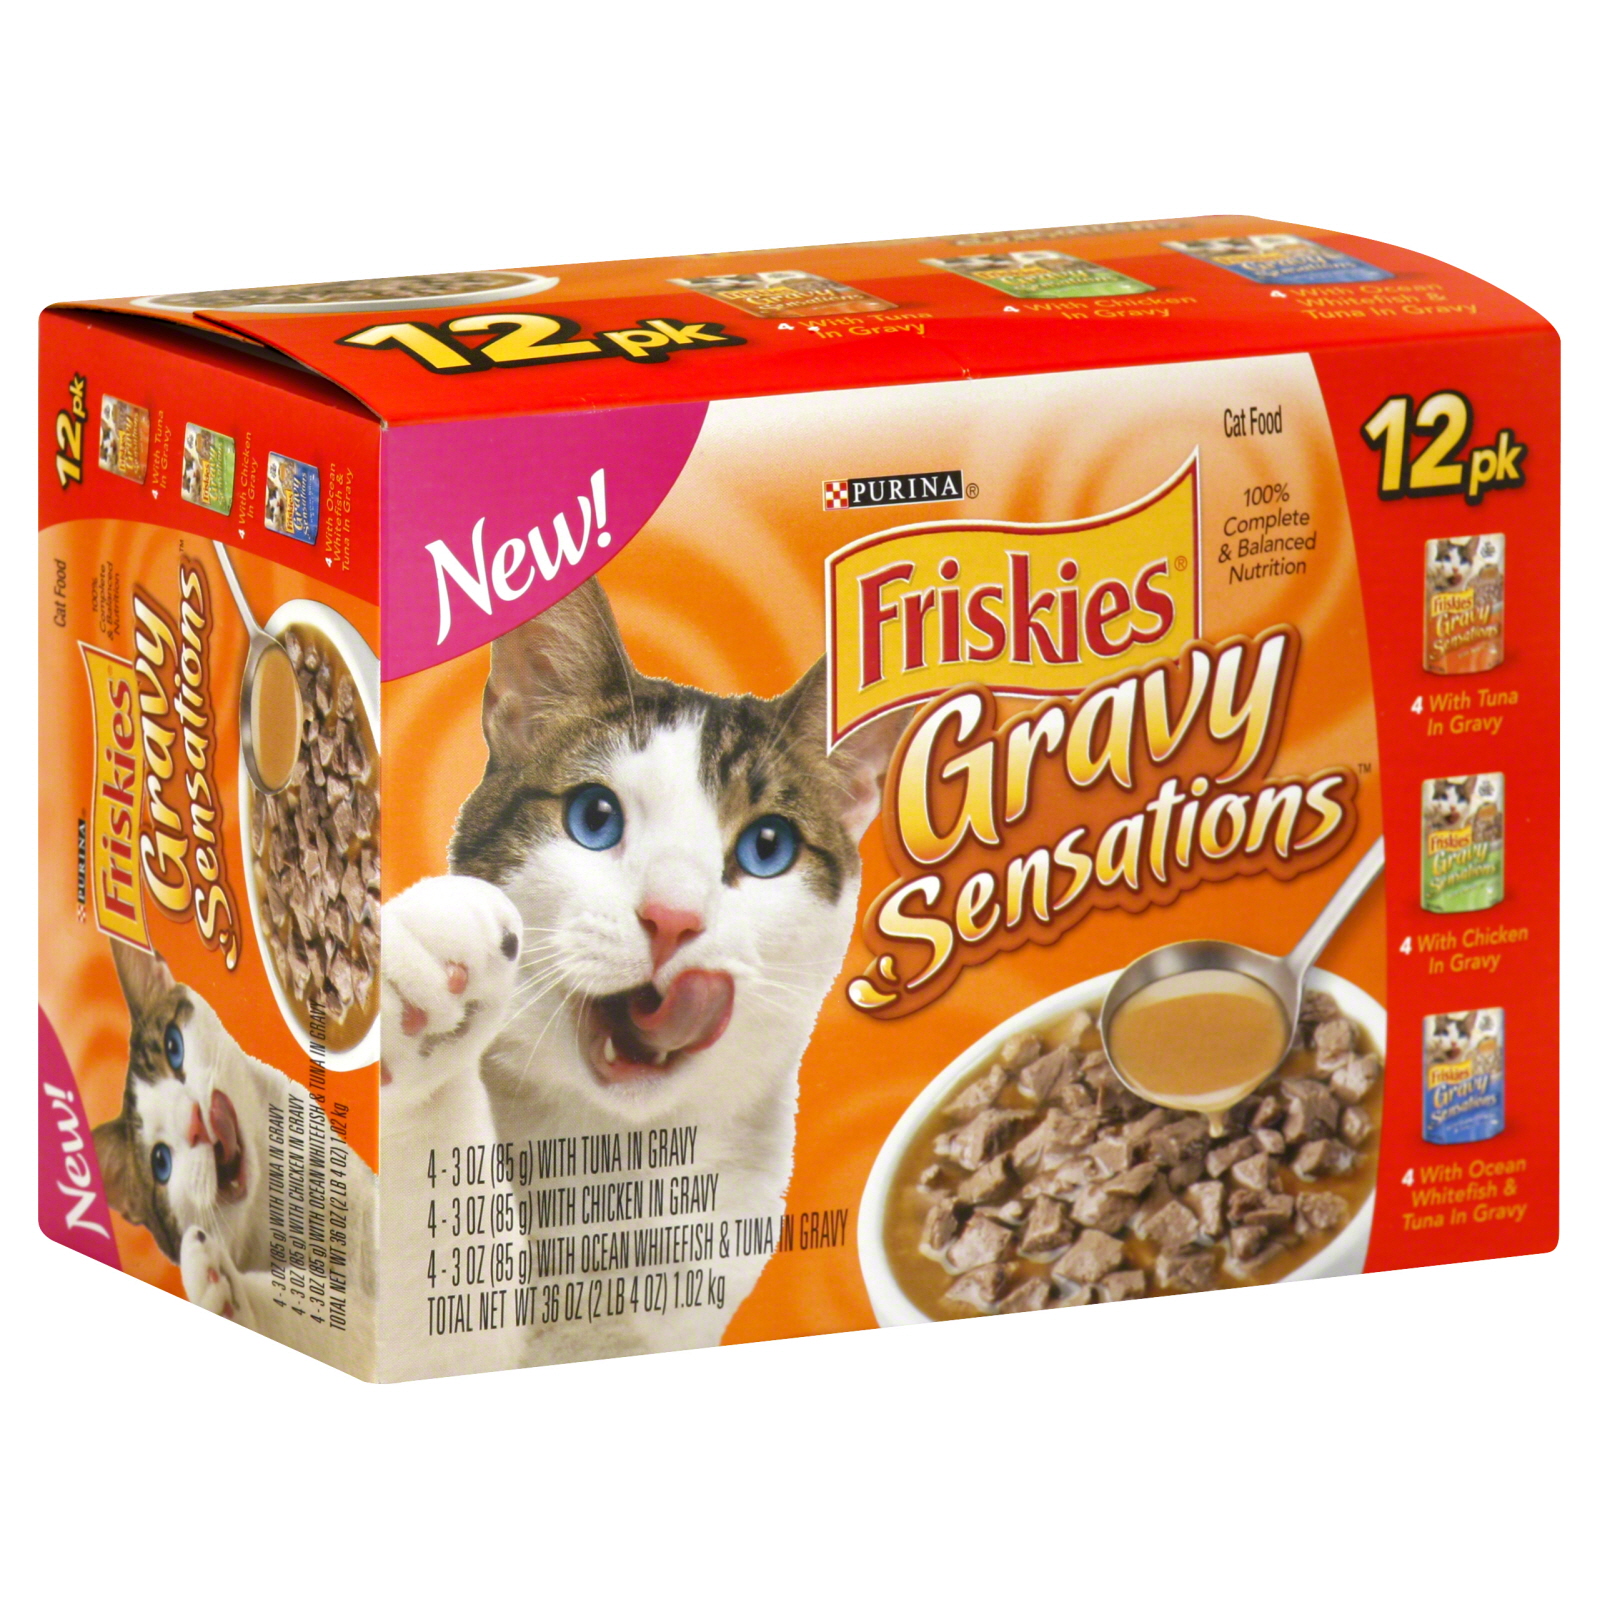 Friskies Tasty Treasures with Chicken & Cheese in Gravy Cat Food 5.5 oz